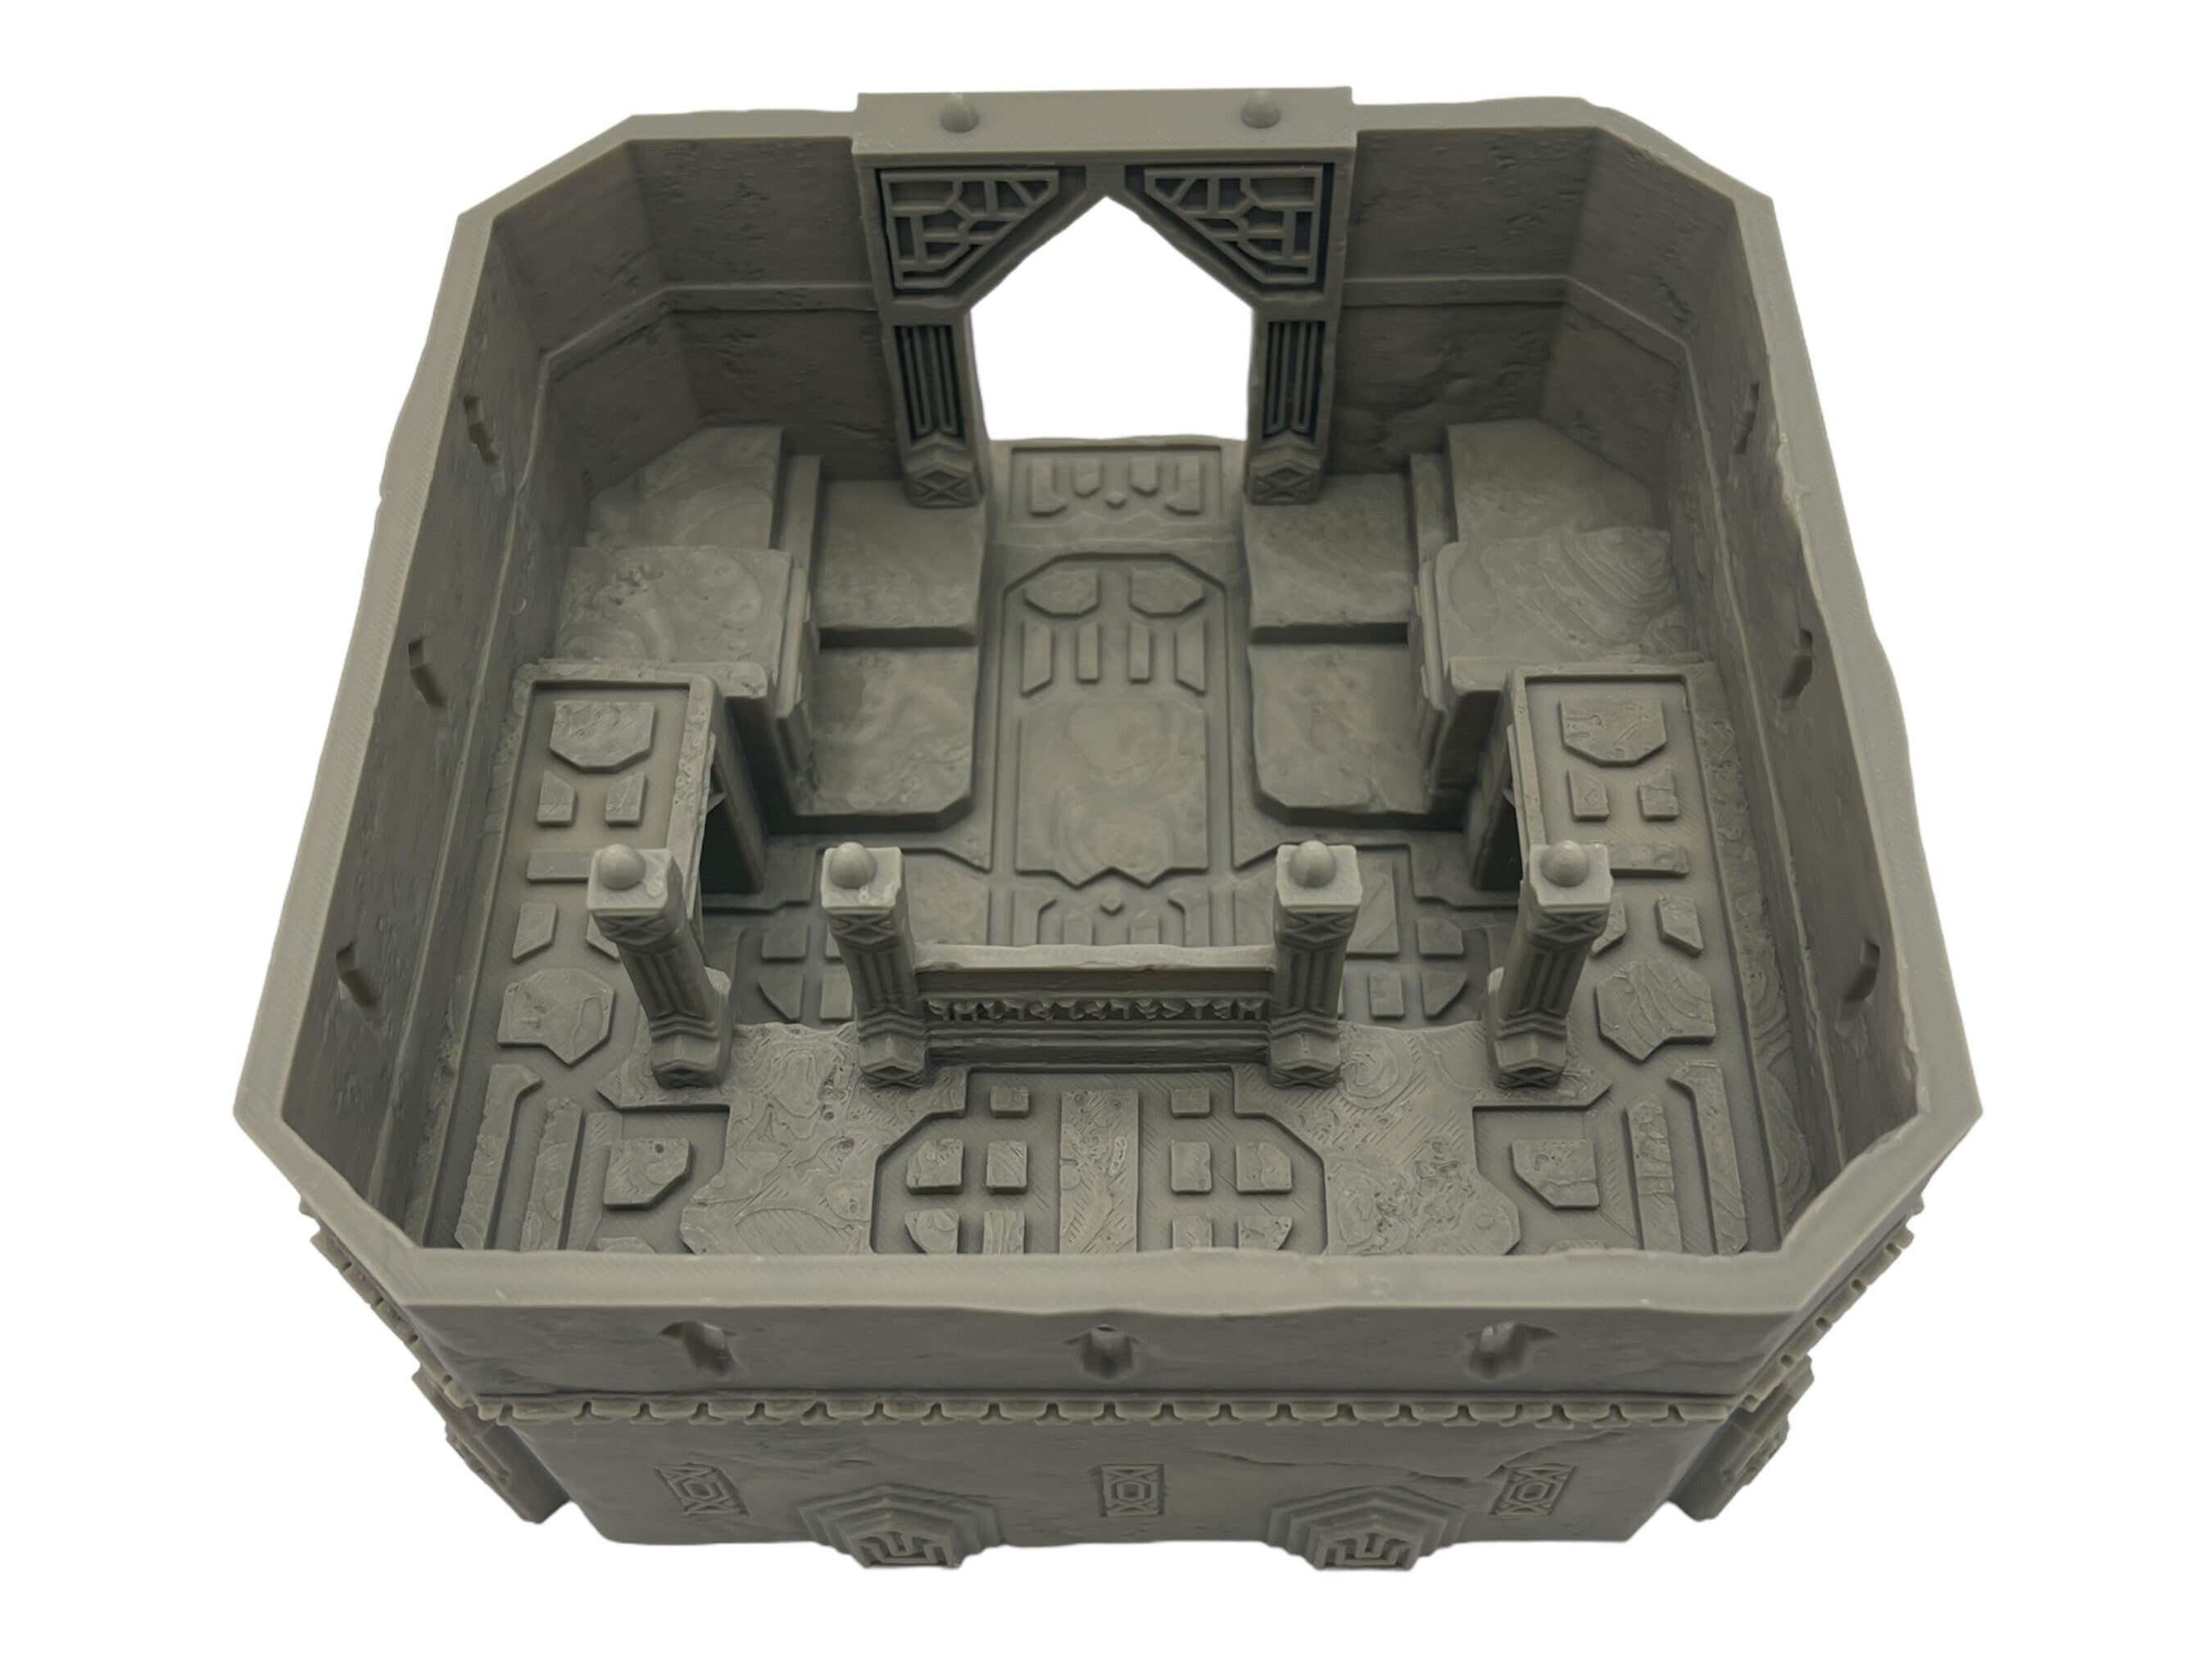 Tomb of Kings Entrance / Durak Deep / RPG and Wargame 3d Printed Tabletop Terrain / Licensed Printer